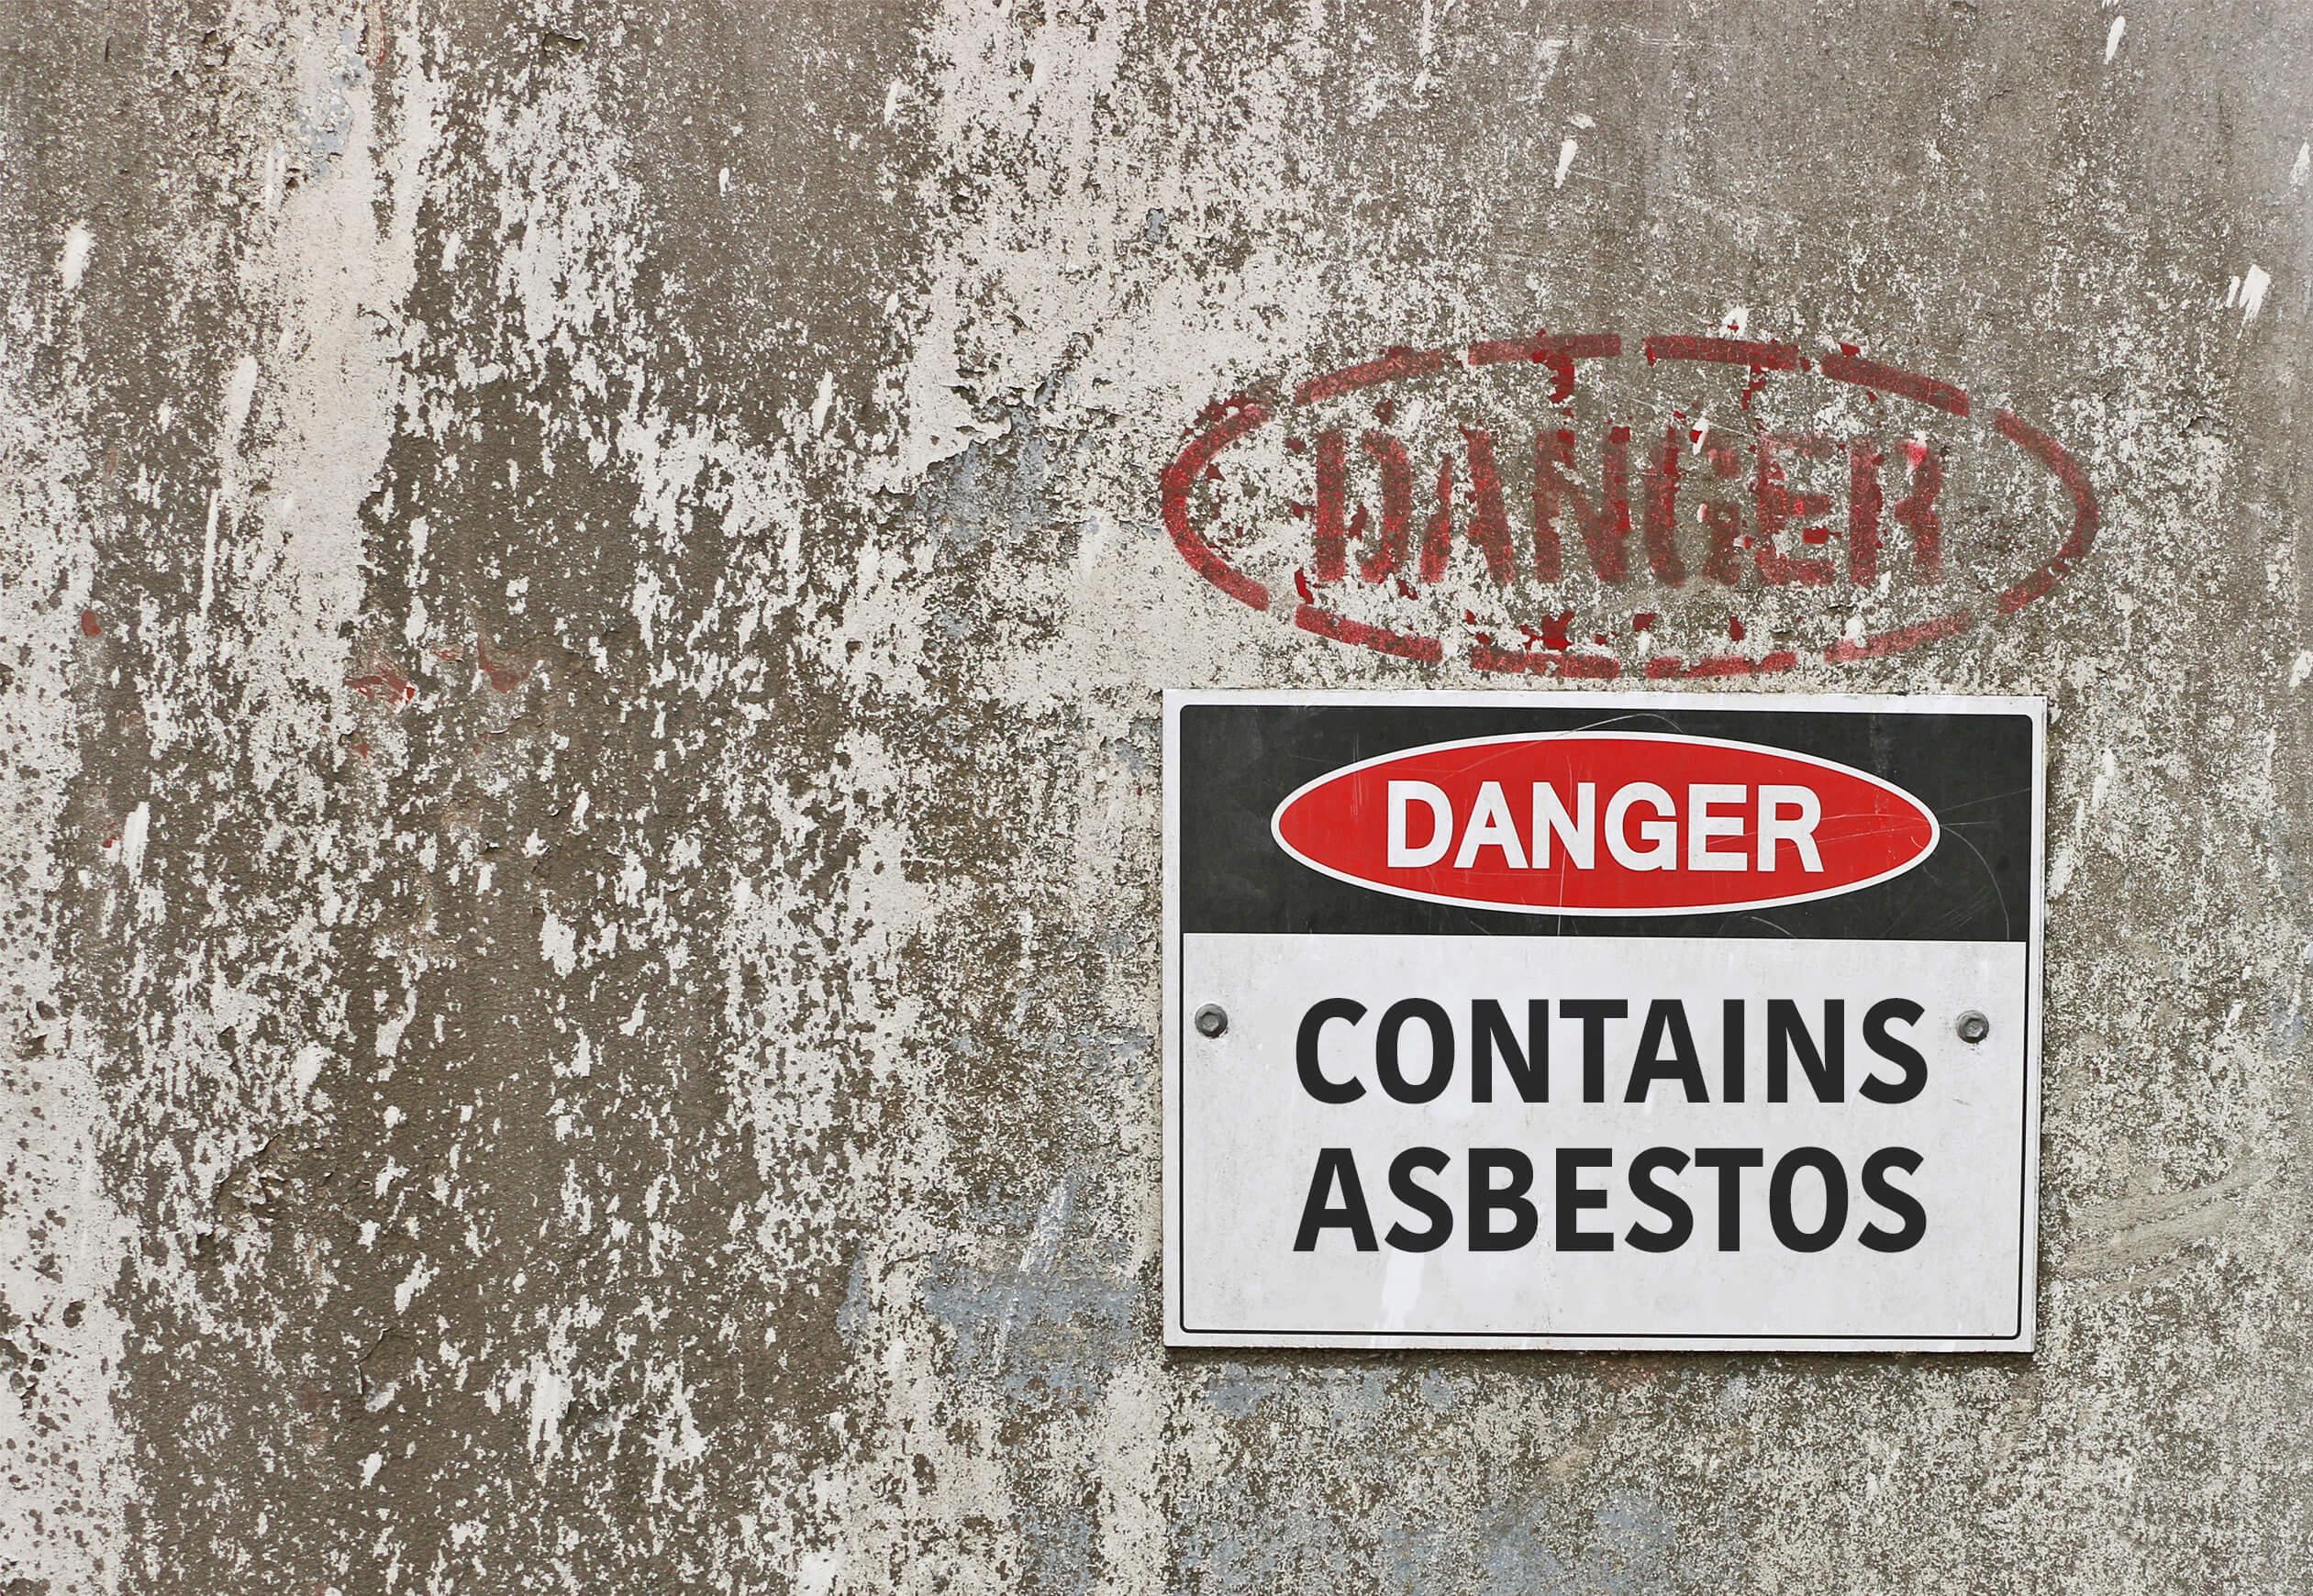 Suffering from asbestos exposure? Count on Mooney